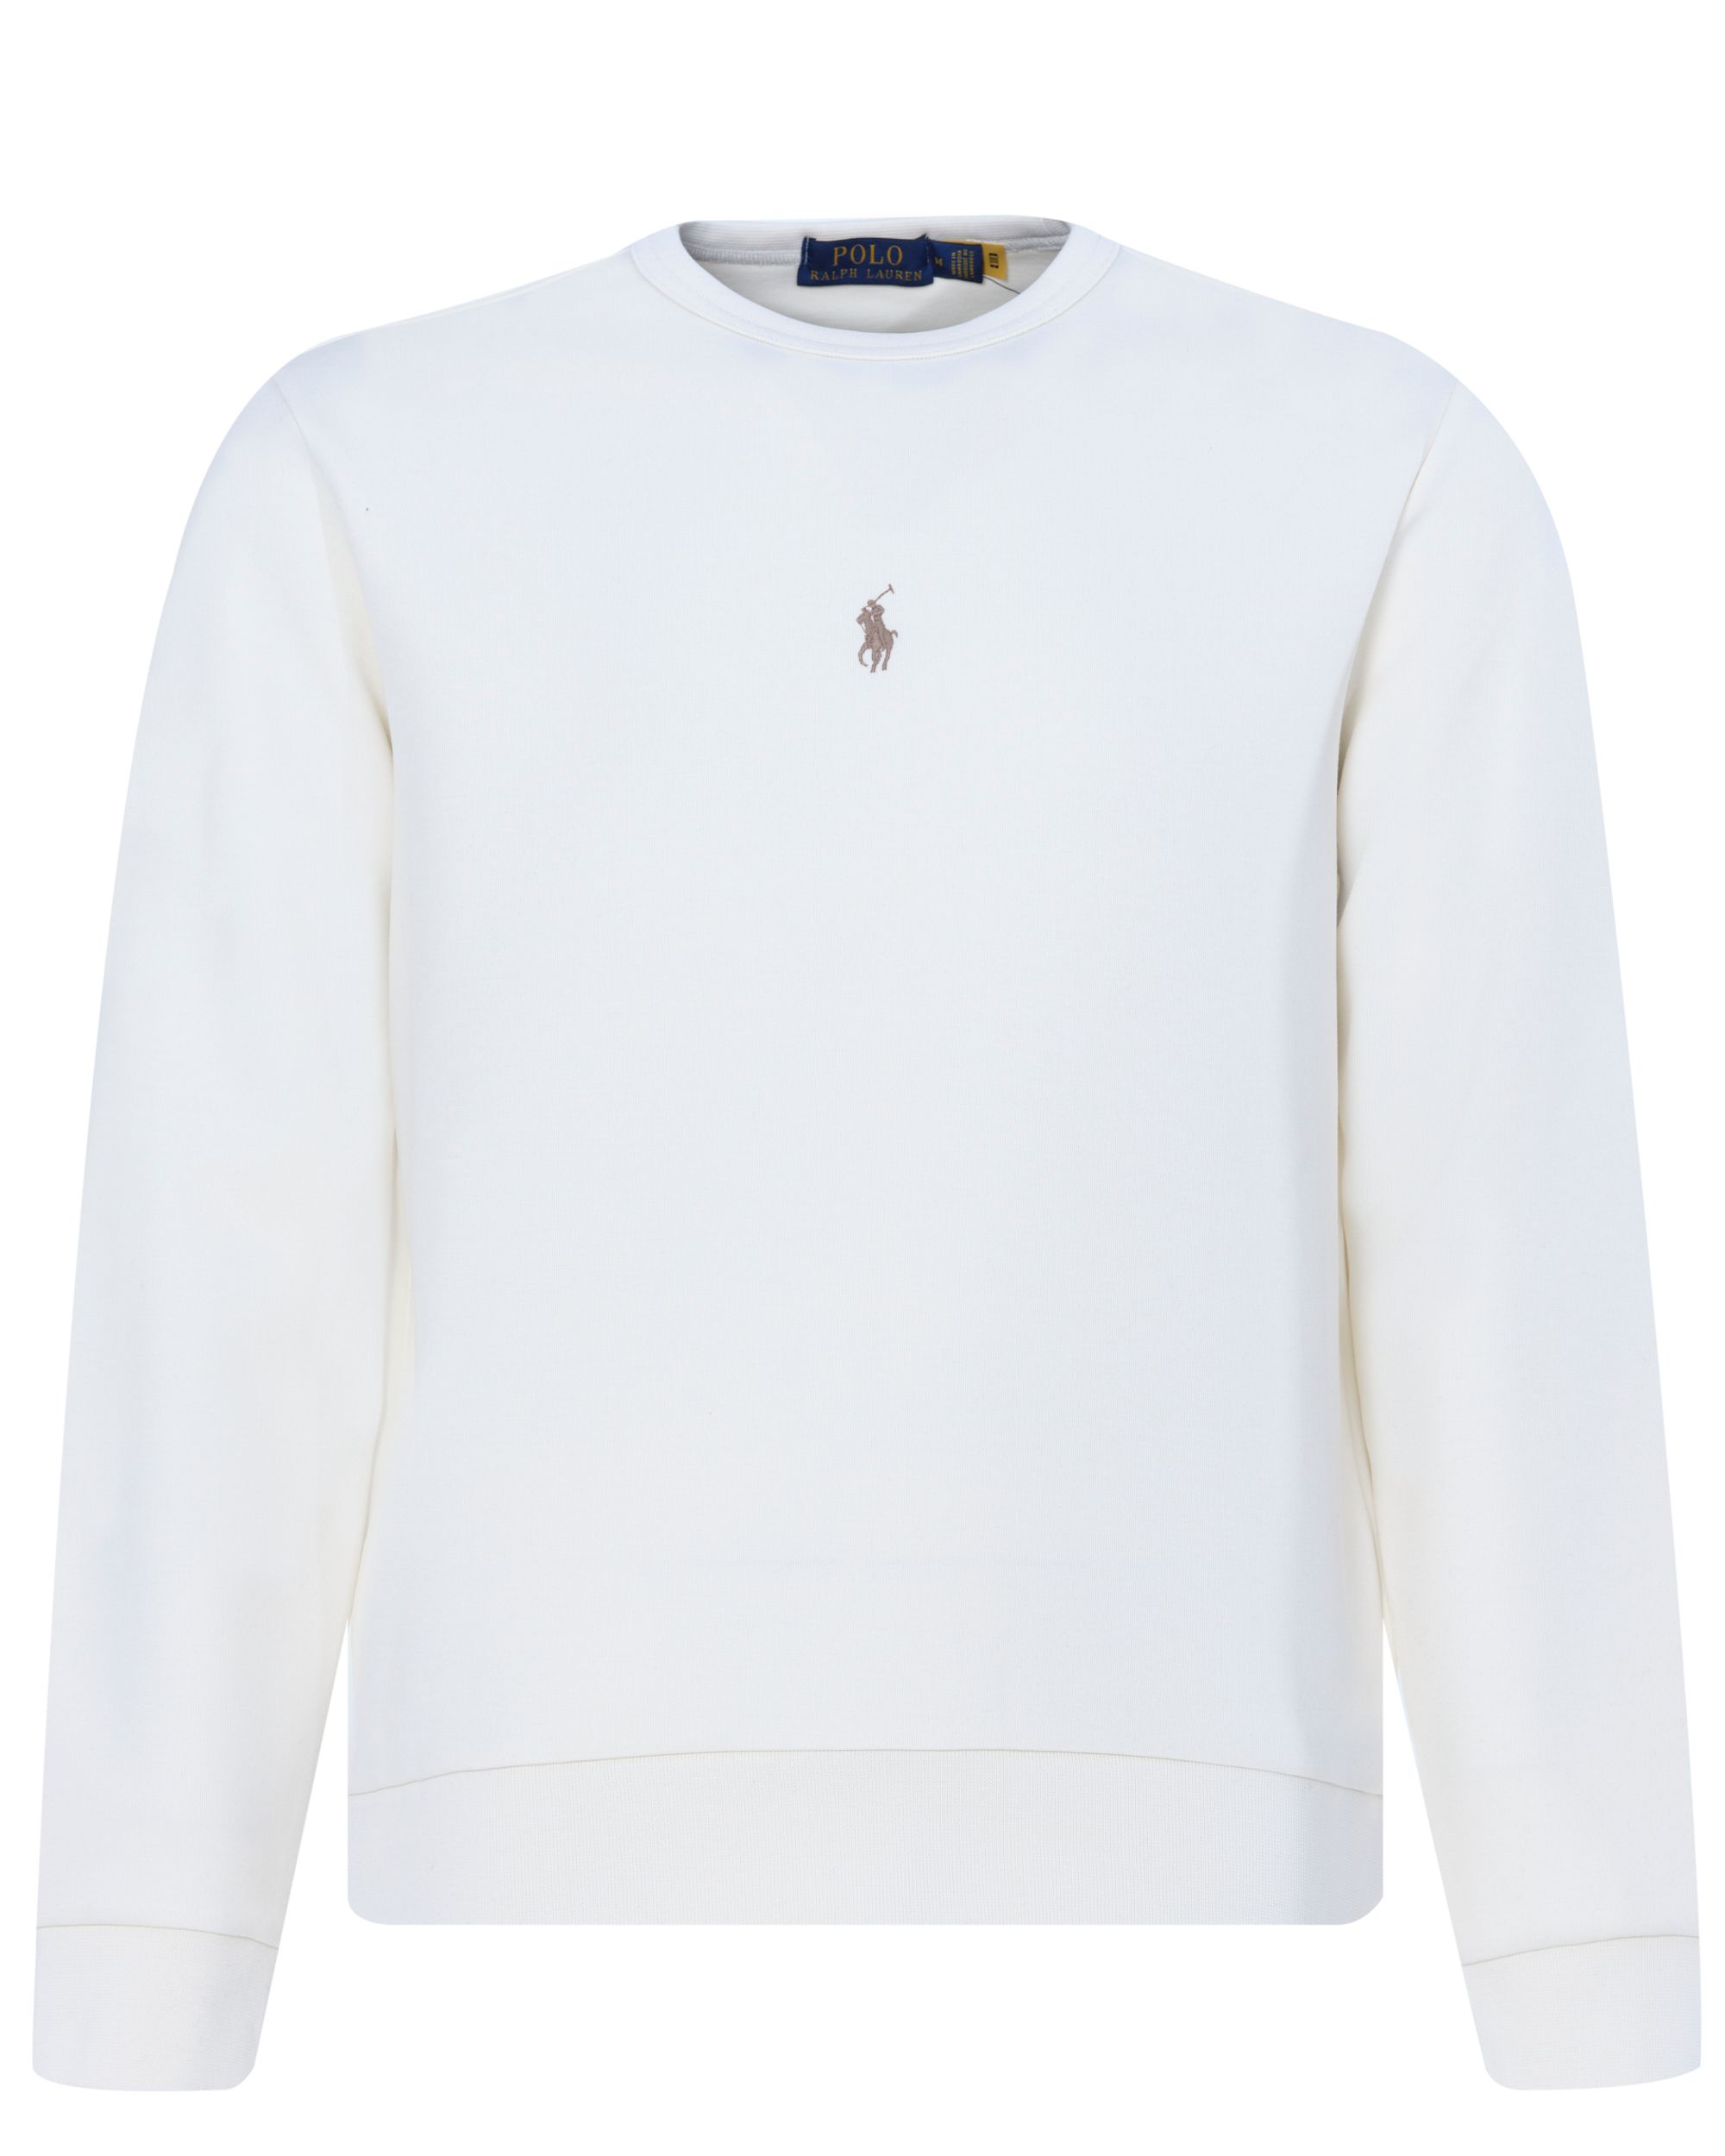 Polo Ralph Lauren Sweater Ecru 080627-001-L